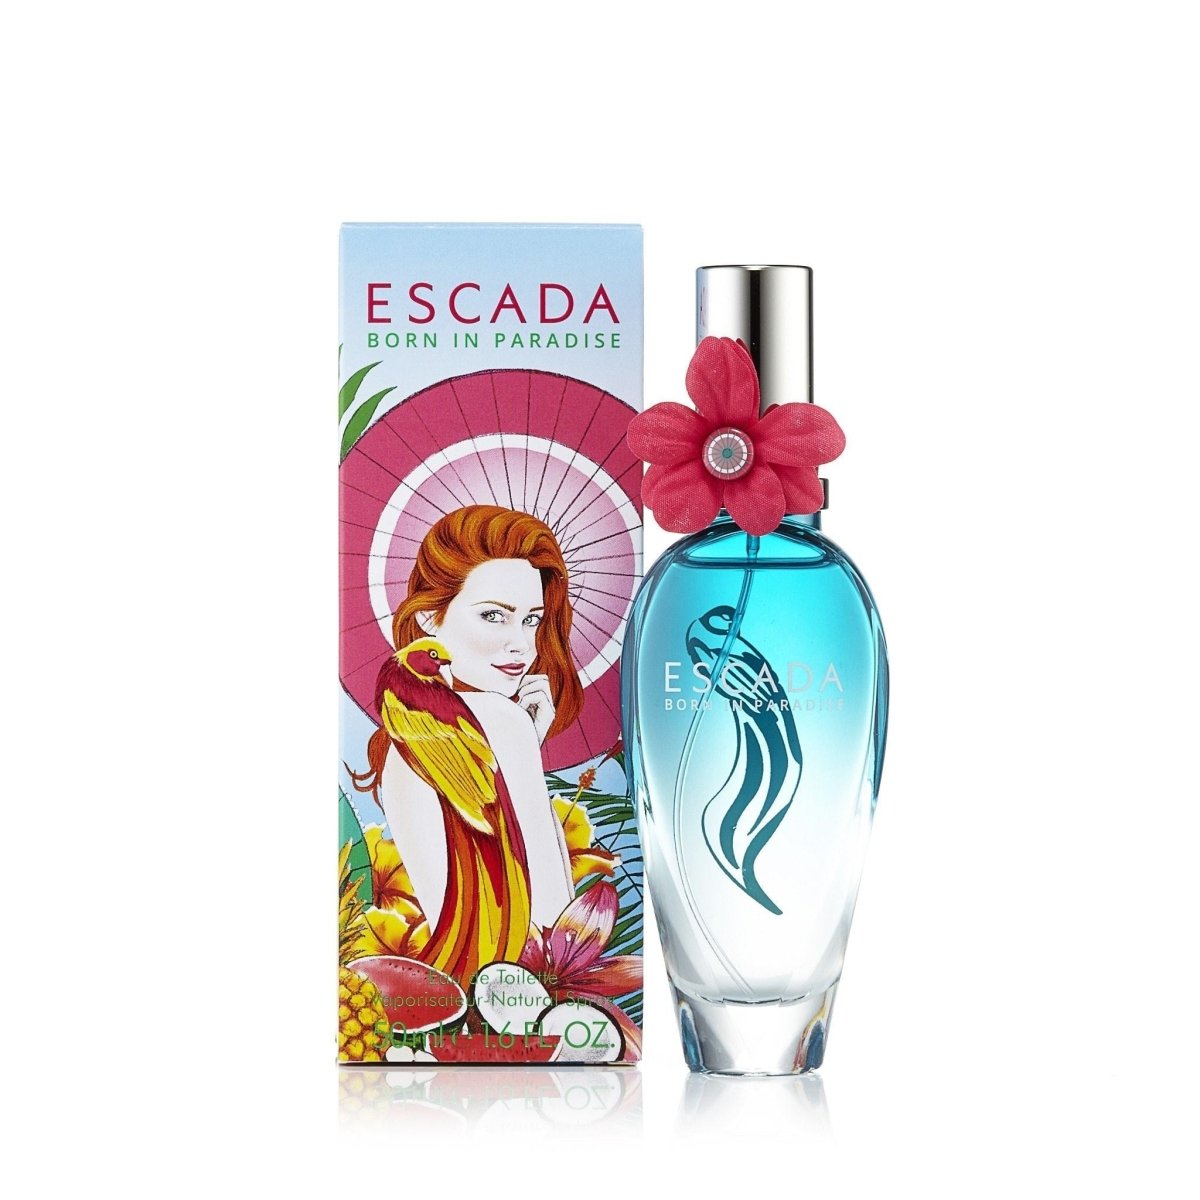 Born in Paradise Eau de Toilette Spray for Women by Escada 1.7 oz.